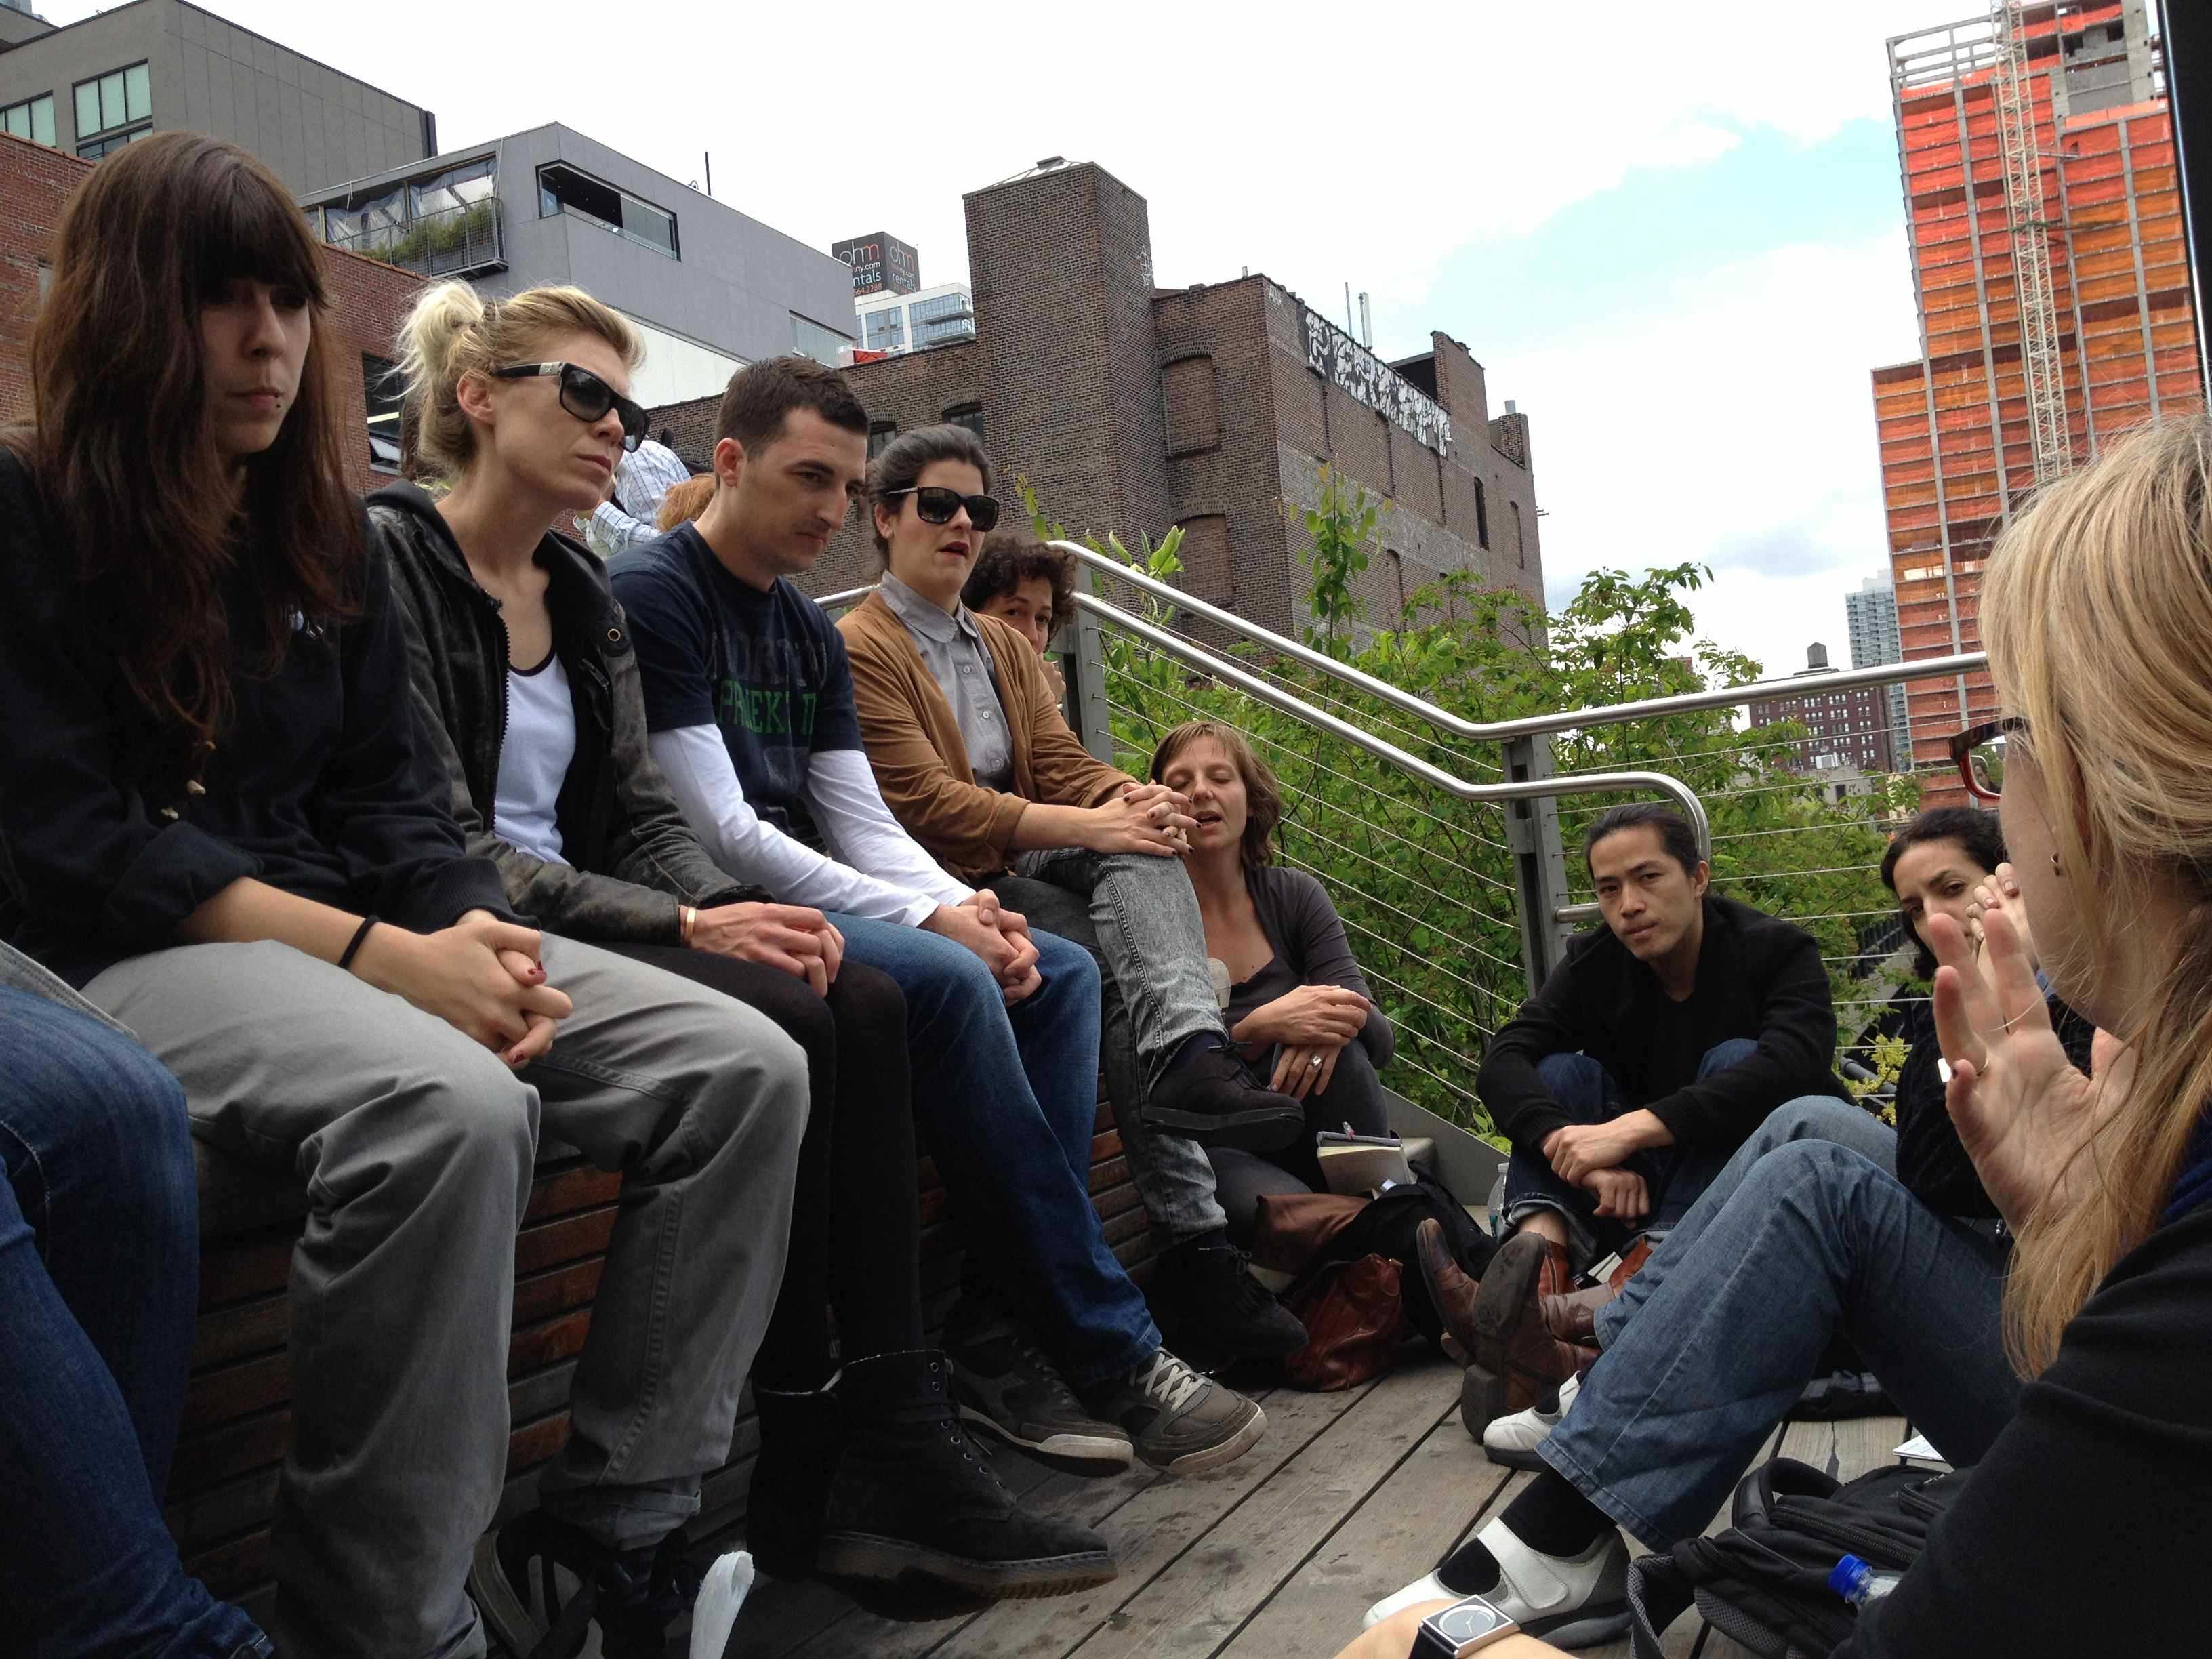 Liselot van der Heuijden lecturing about The High Line